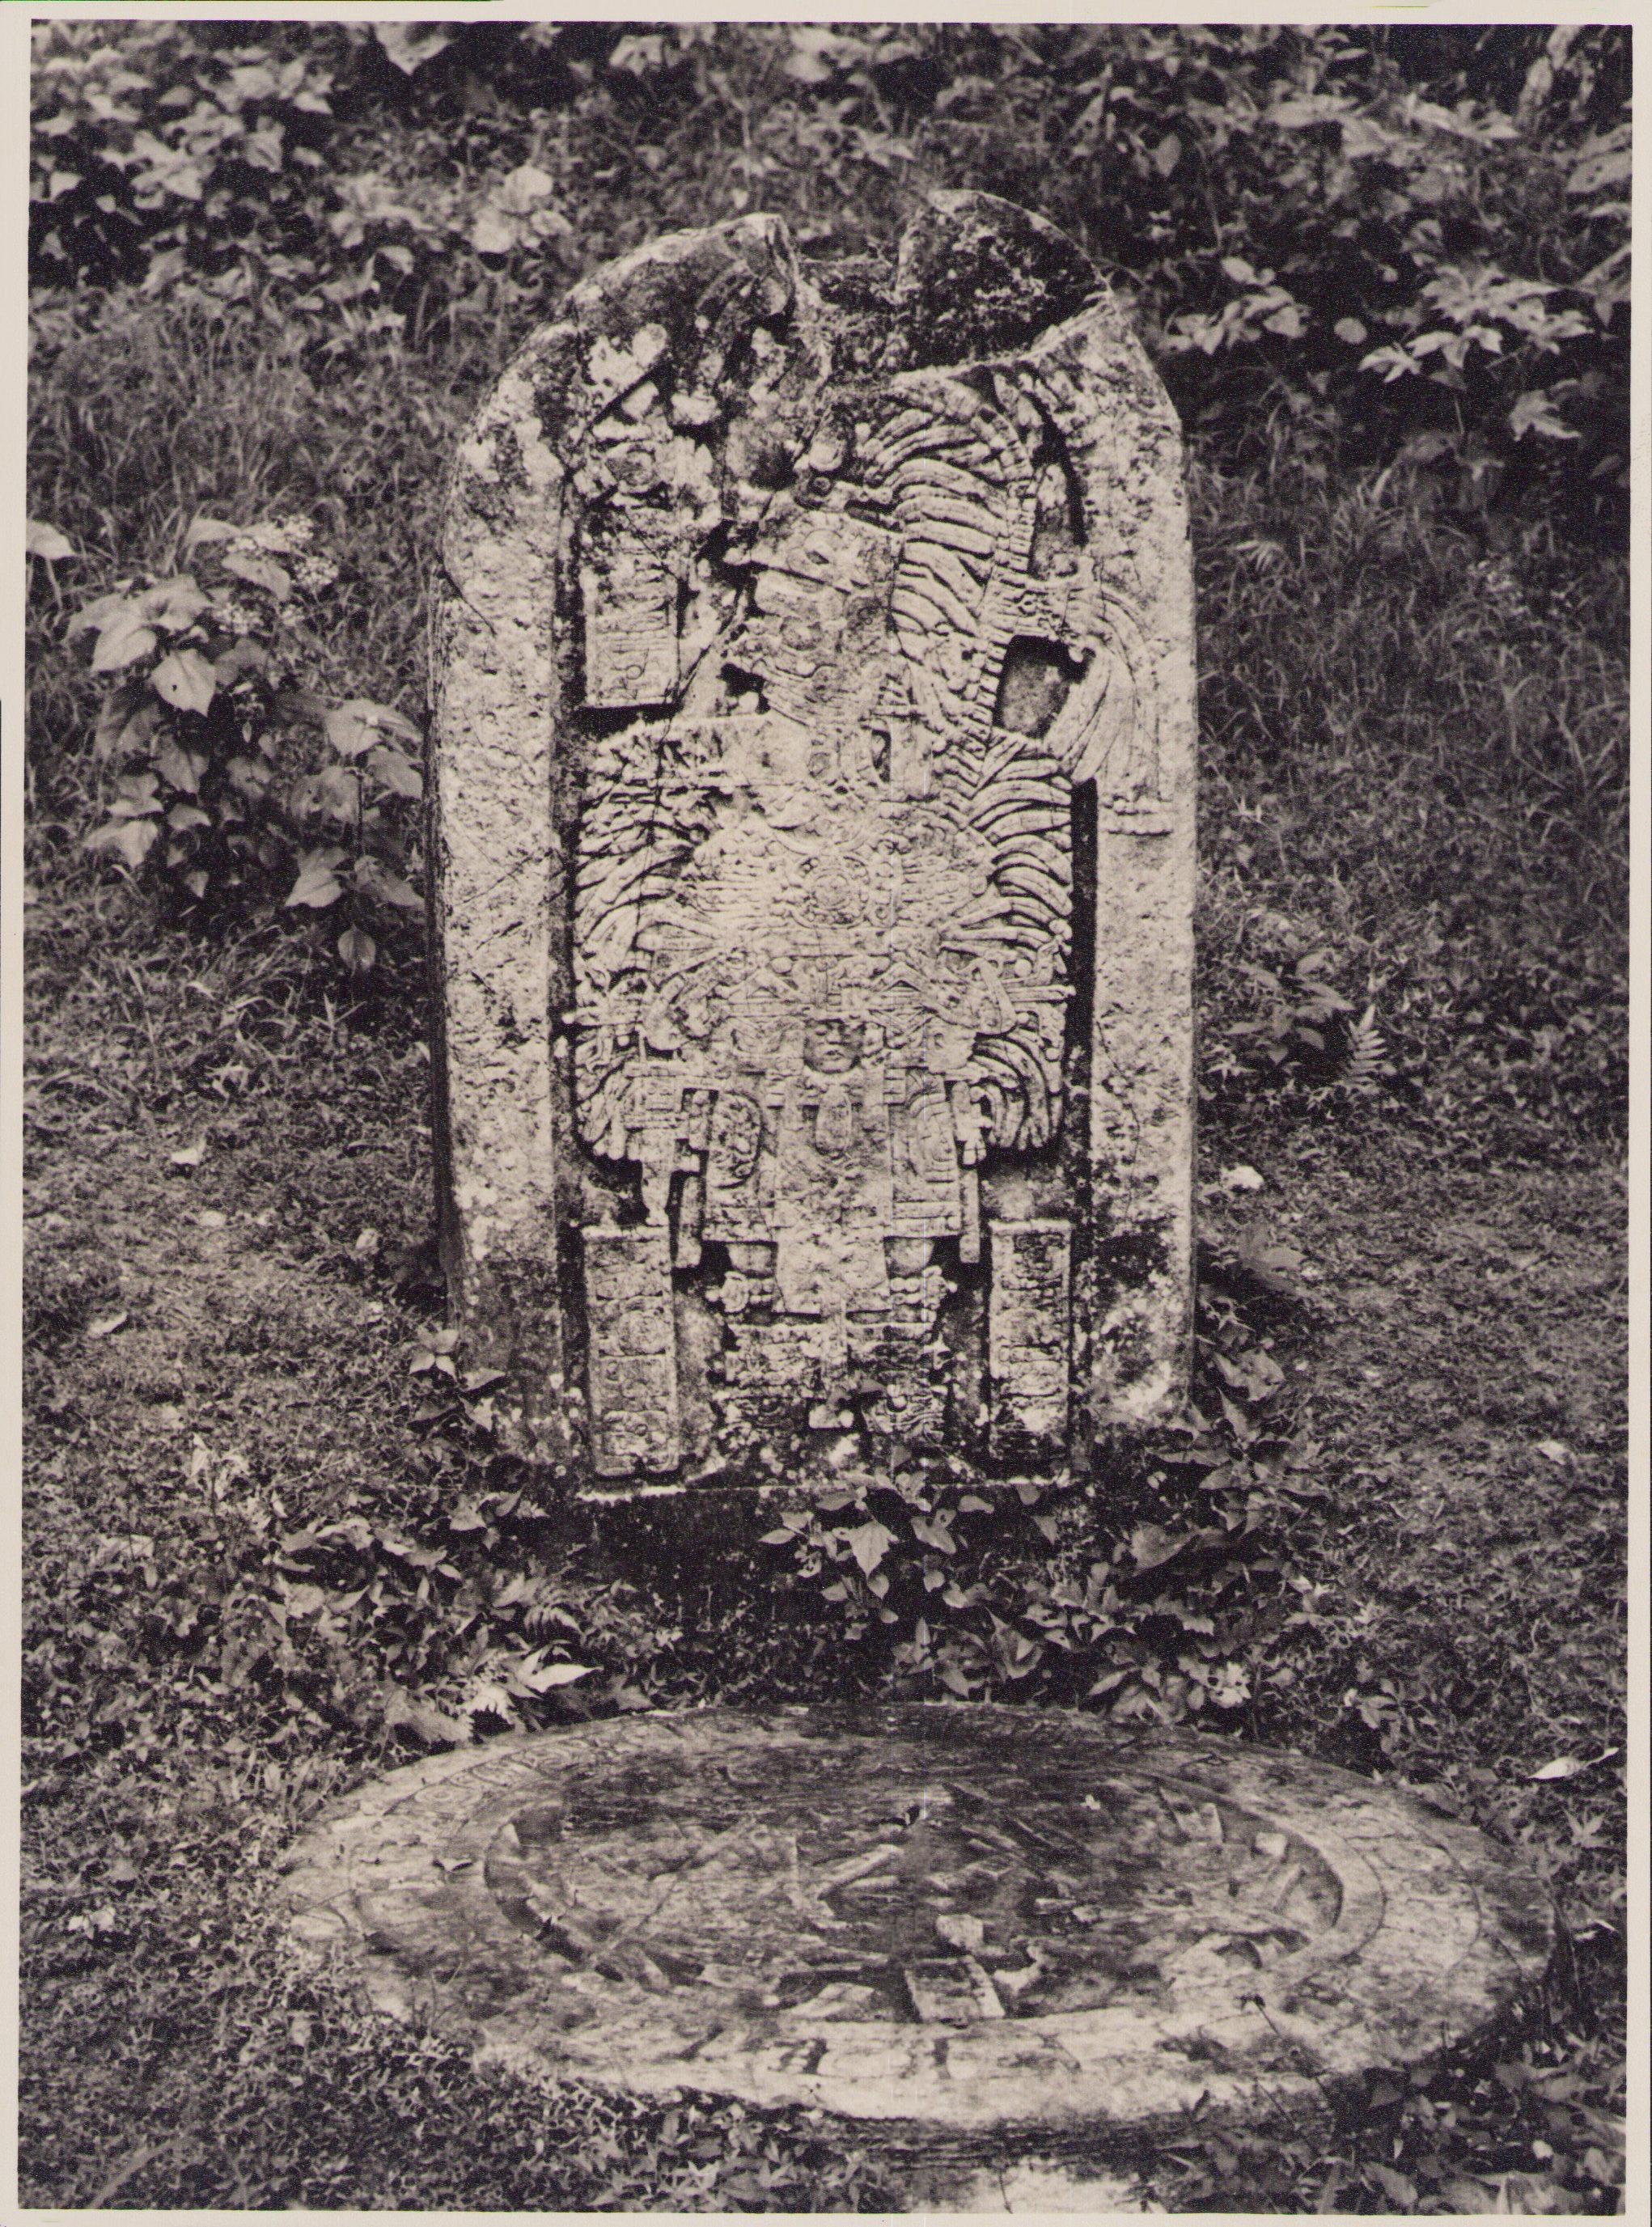 Hanna Seidel Portrait Photograph - Guatemala, Mayan-Ruins, Black and White Photography, ca. 1960s, 23, 1 x 17, 1 cm